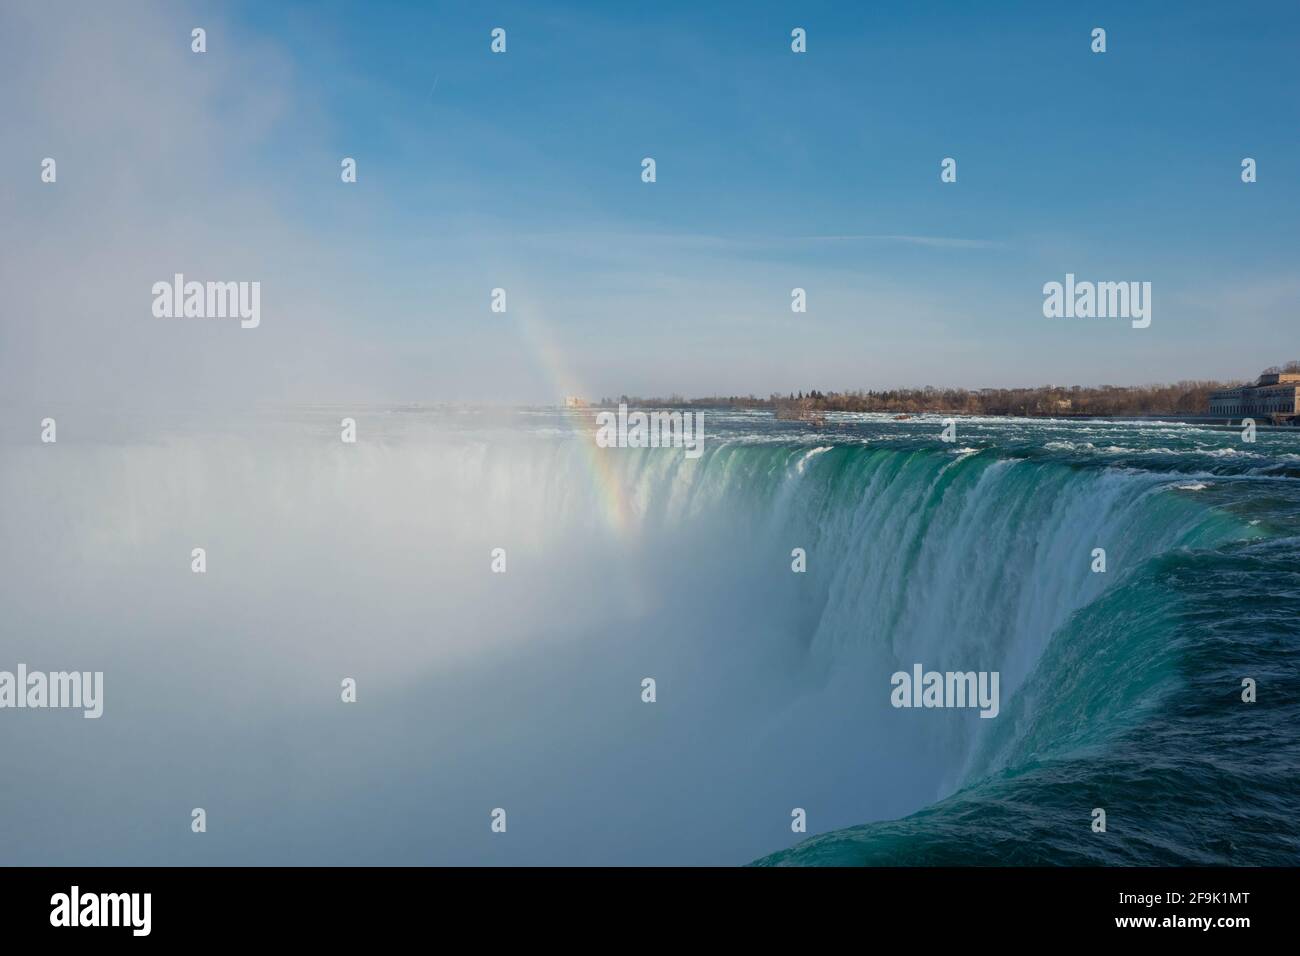 Les chutes Niagara bleues en Ontario, au Canada, le jour de printemps Banque D'Images